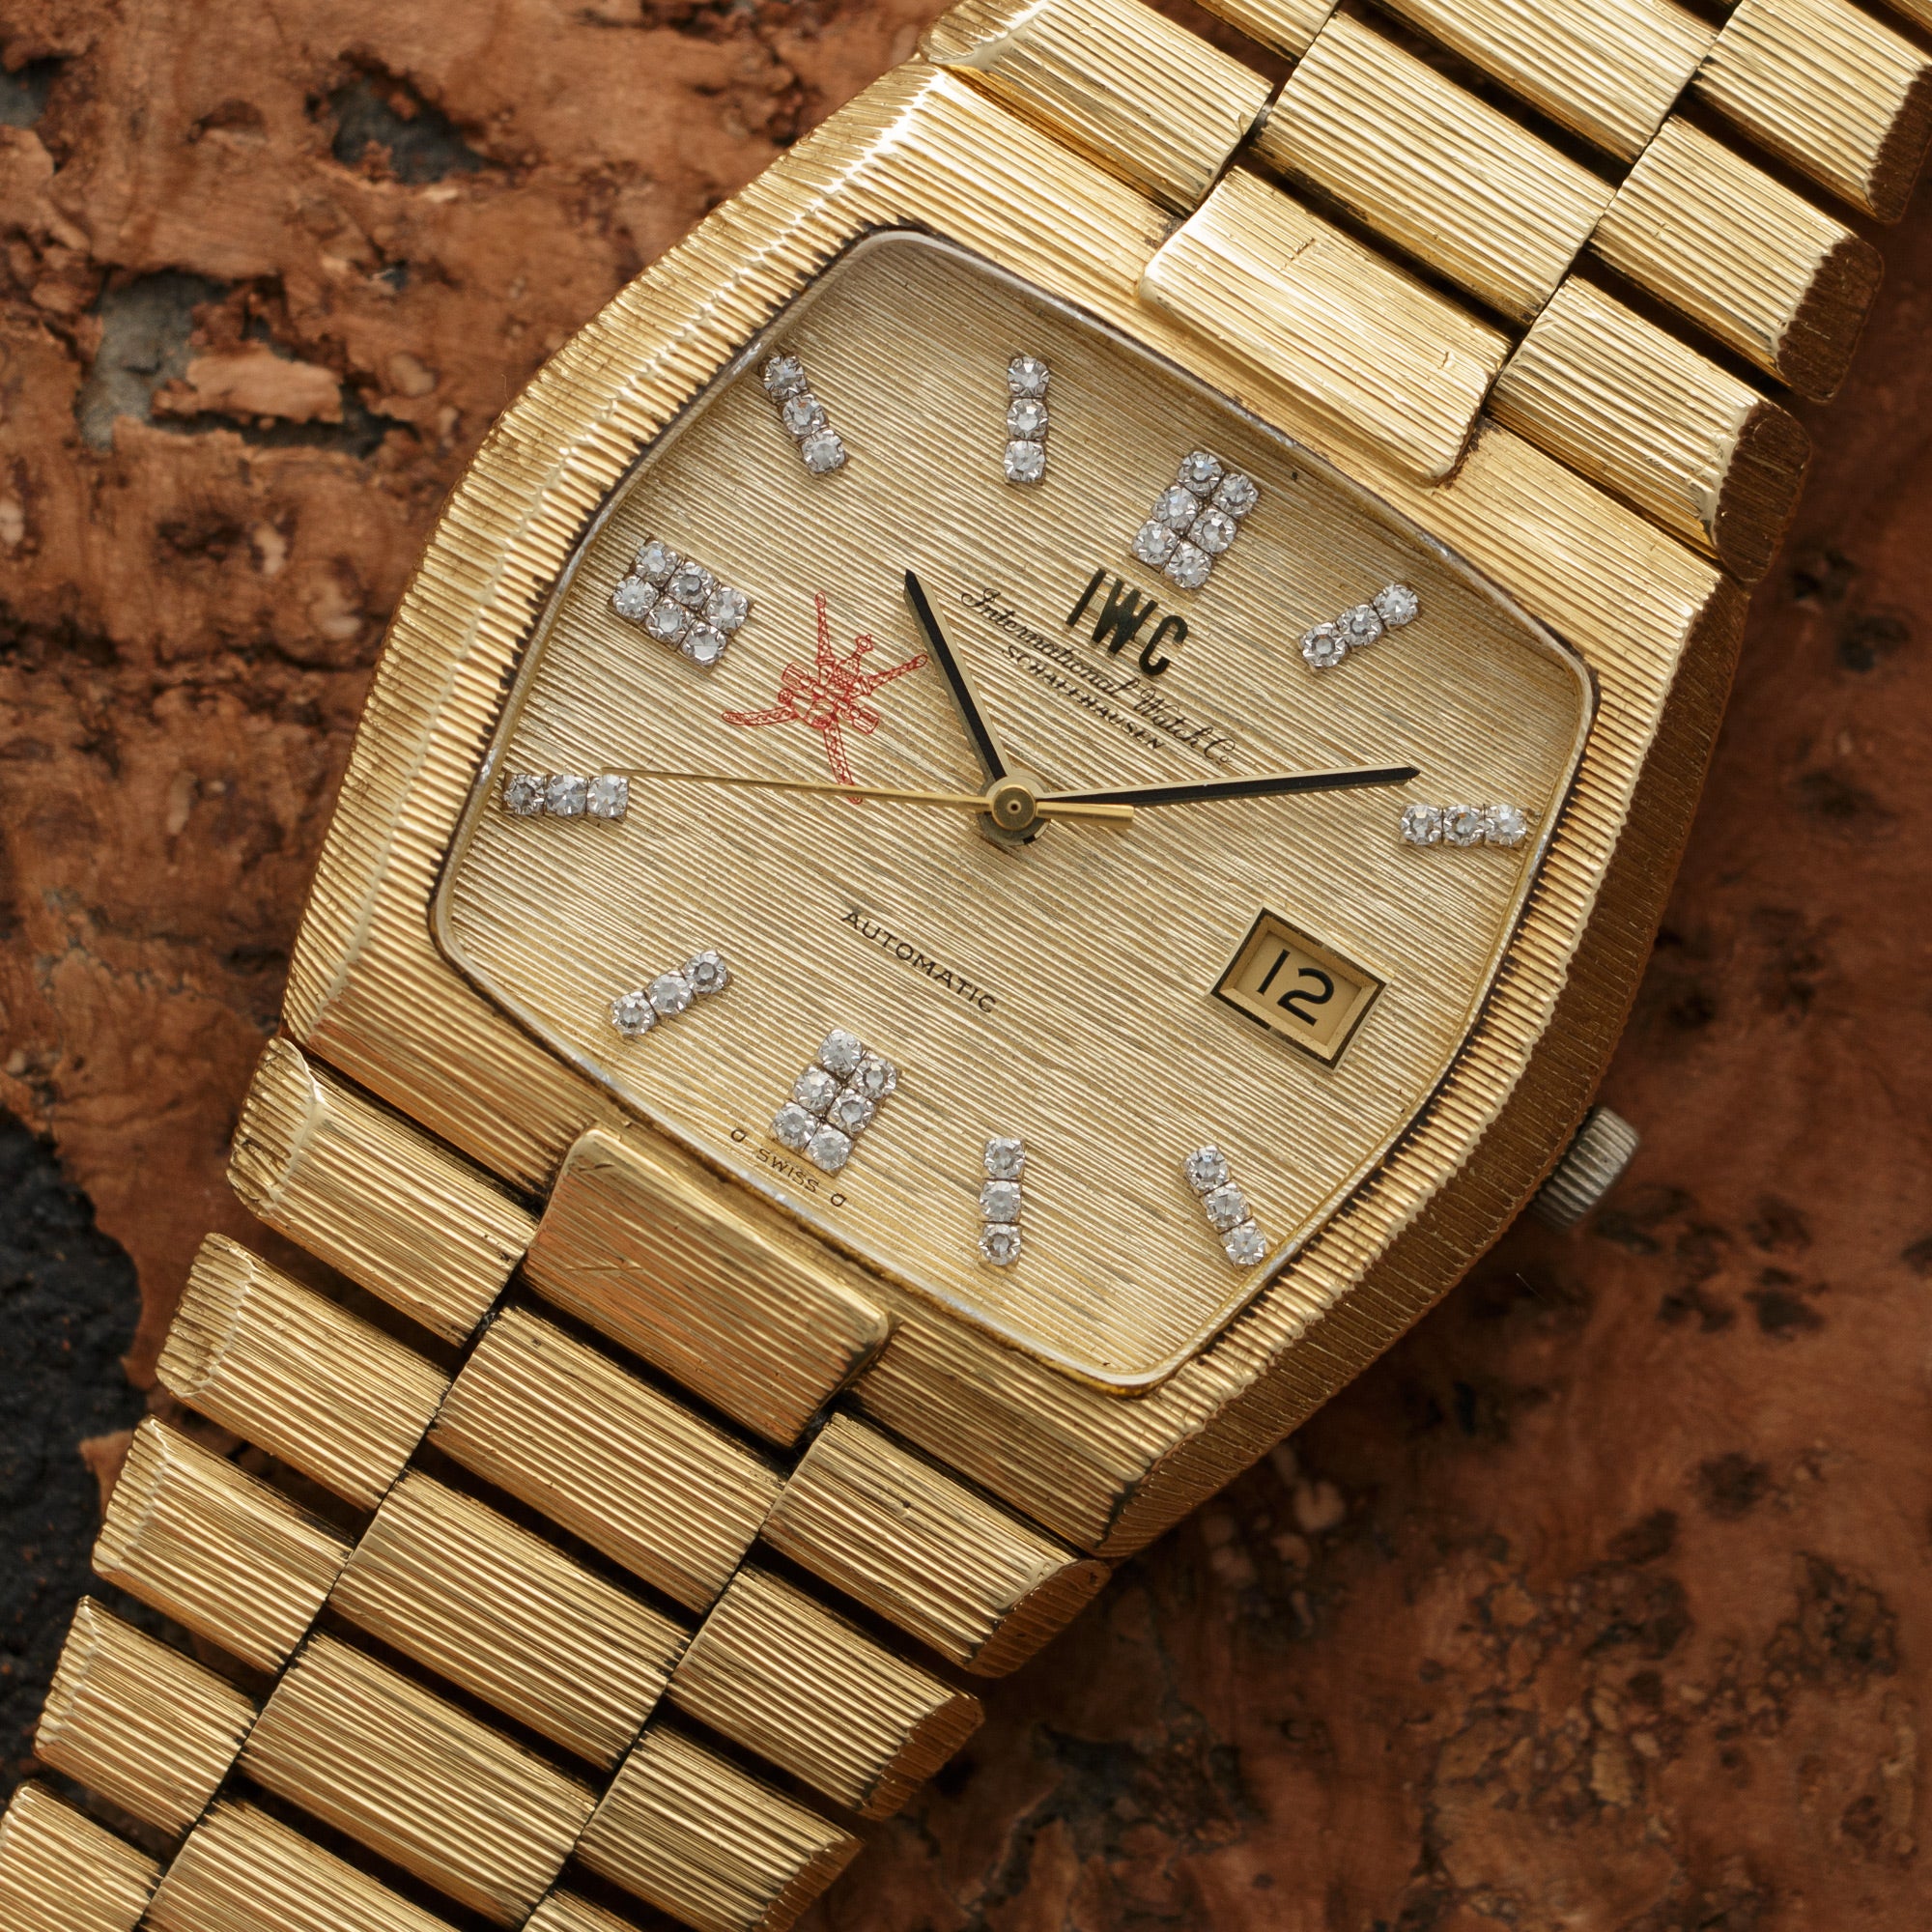 IWC - IWC Yellow Gold Da Vinci Ref. 9212 for the Sultan of Oman - The Keystone Watches